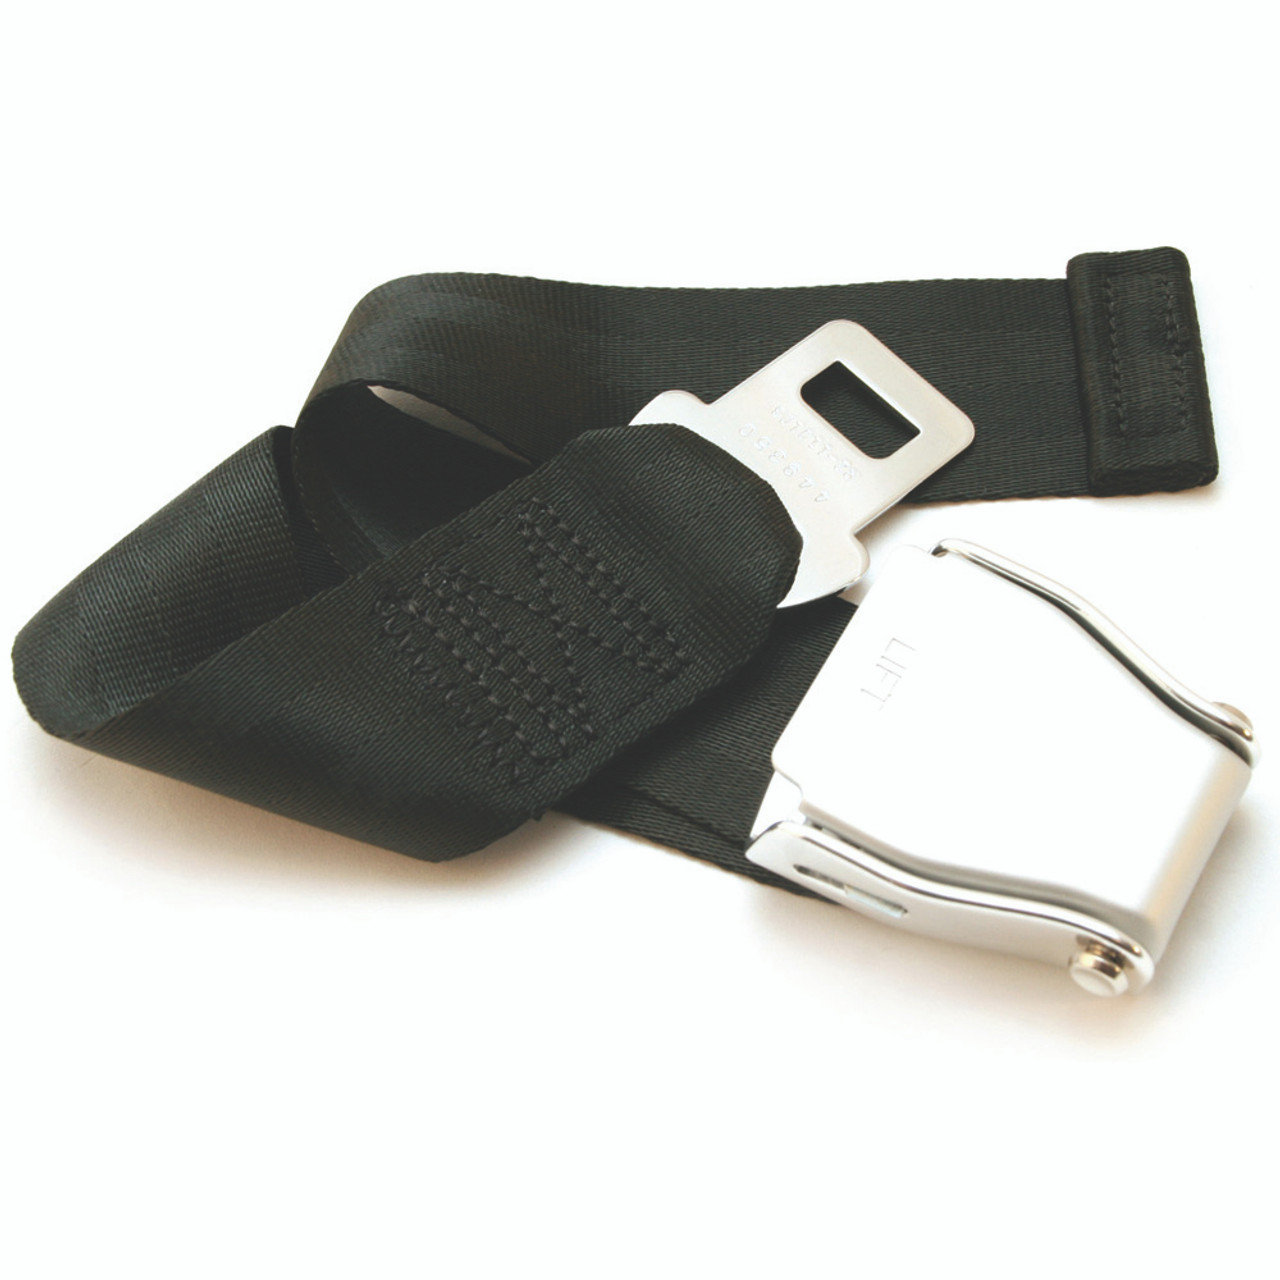 Mirone Universal Adjustable Airplane Seat Belt Extender Seatbelt Extension